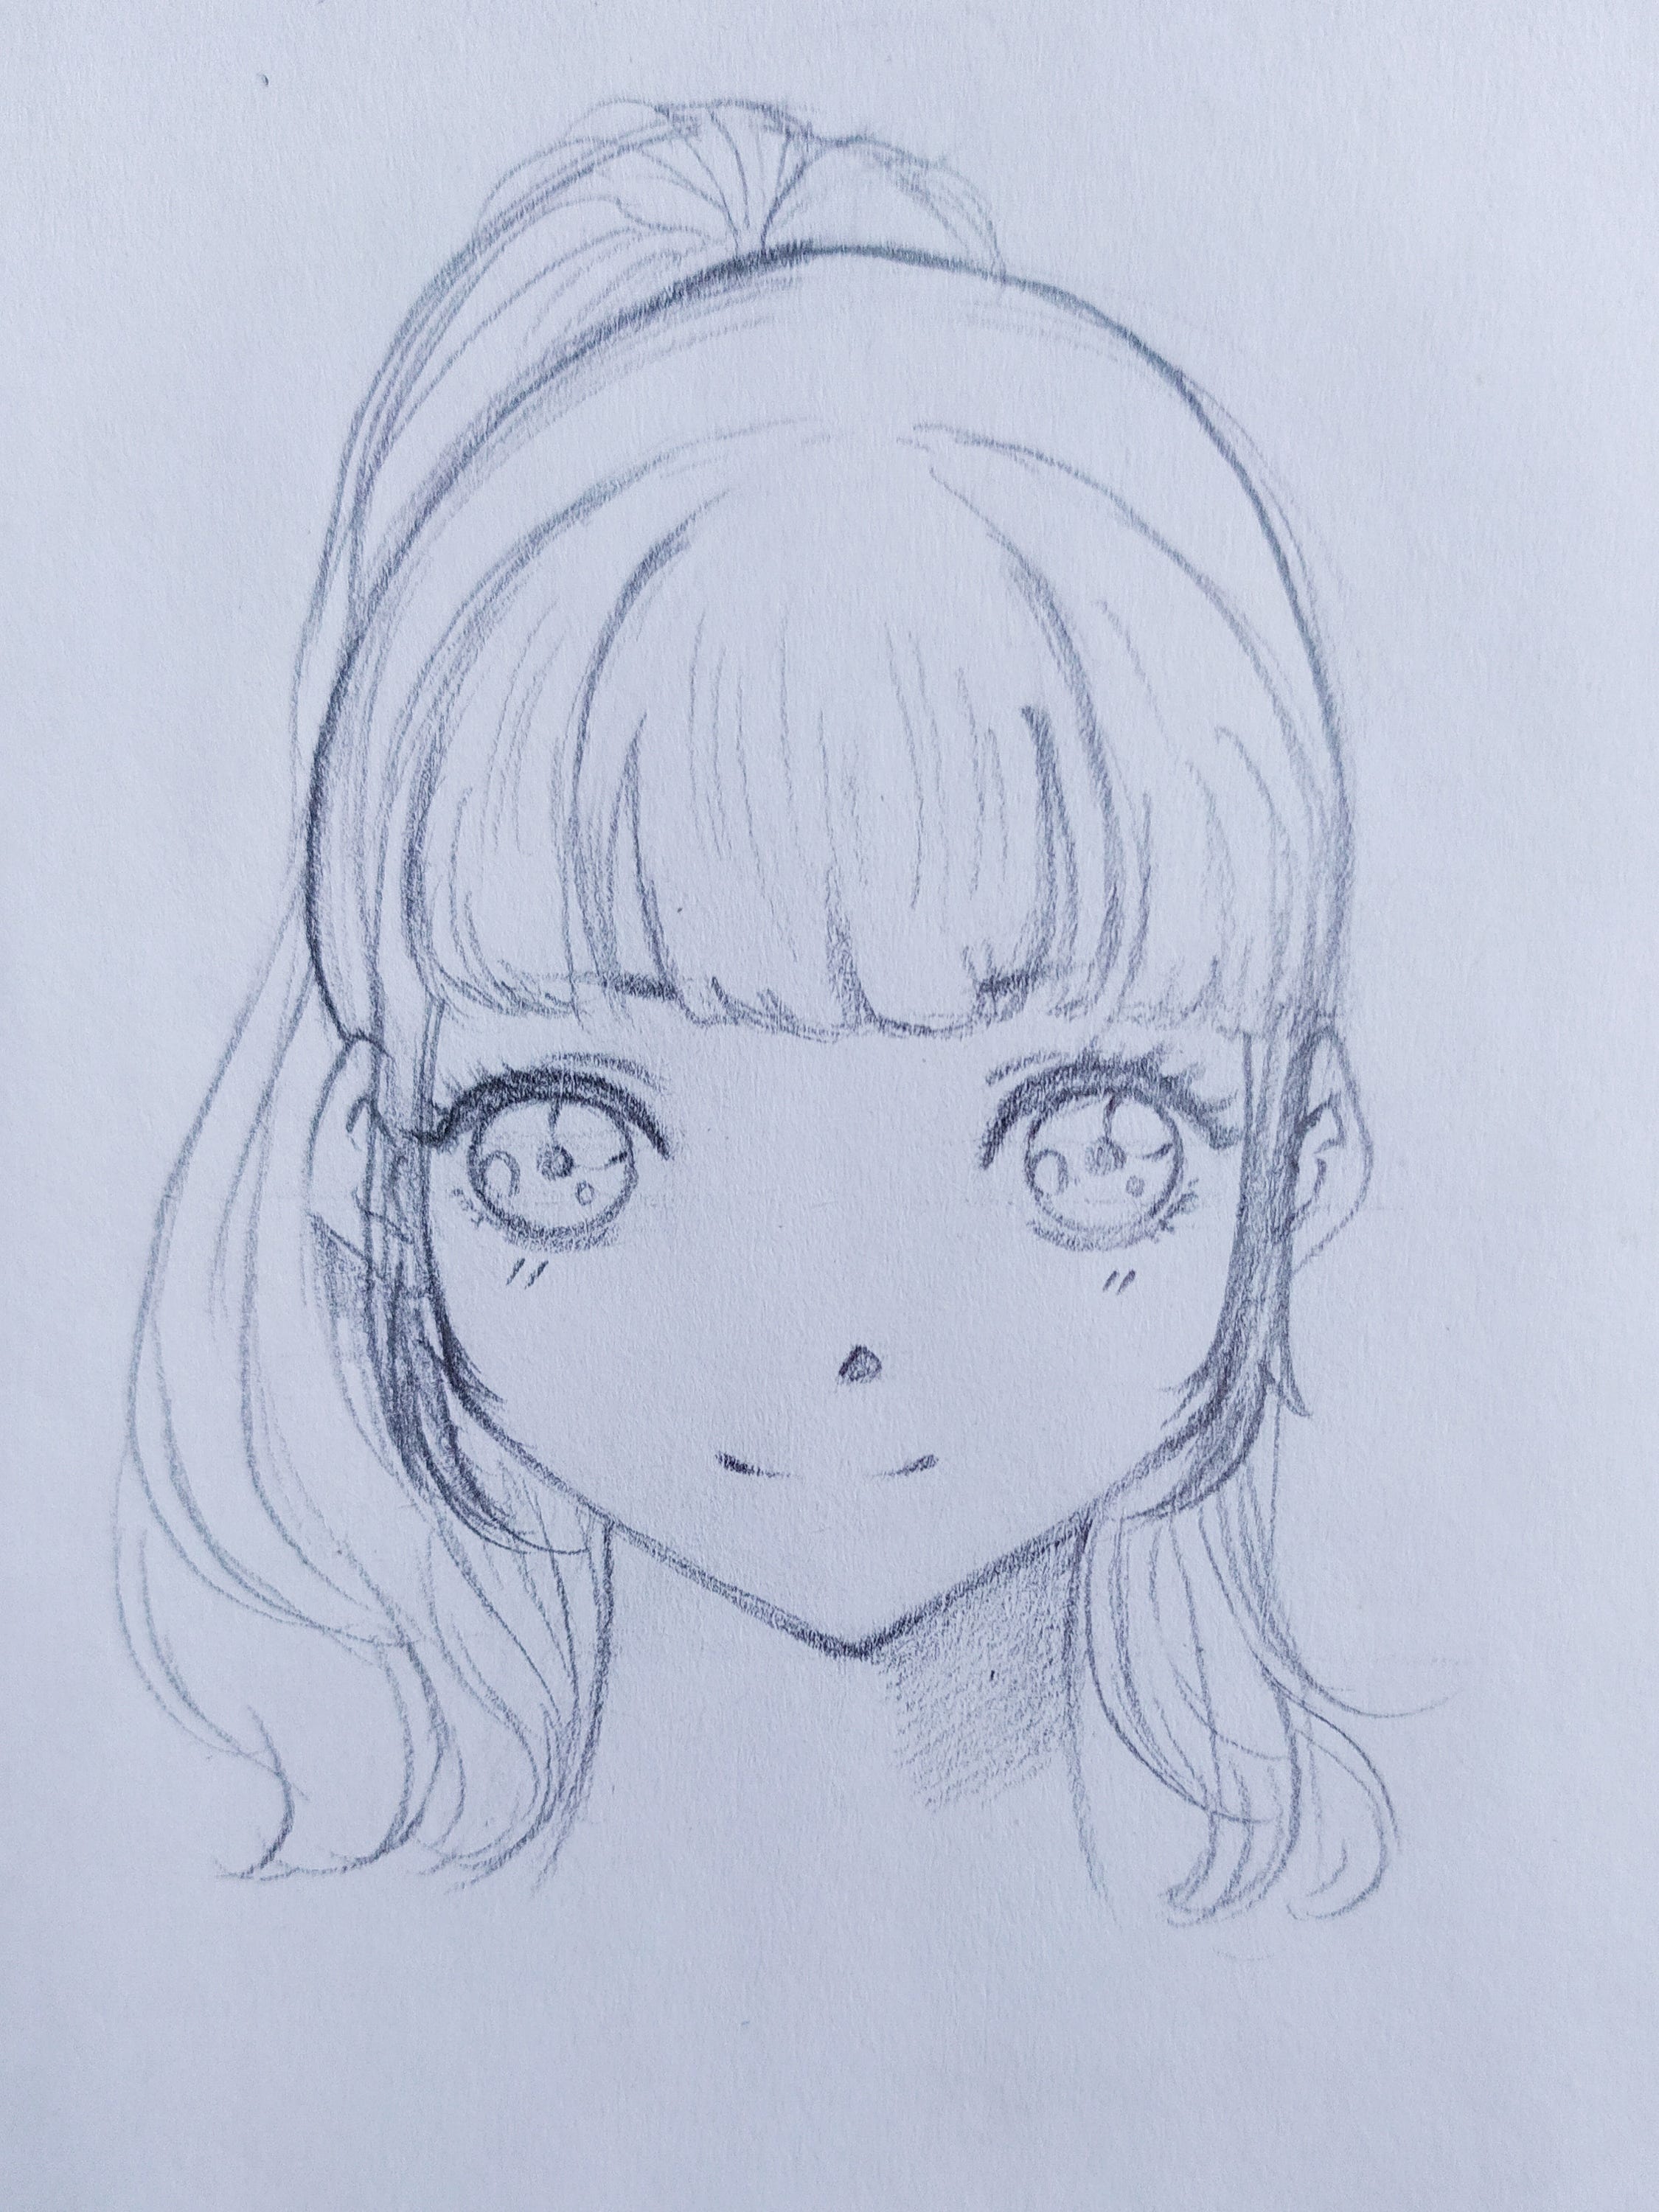 How To Draw A Cute Anime Girl Face Part 1 By Alisha Medium